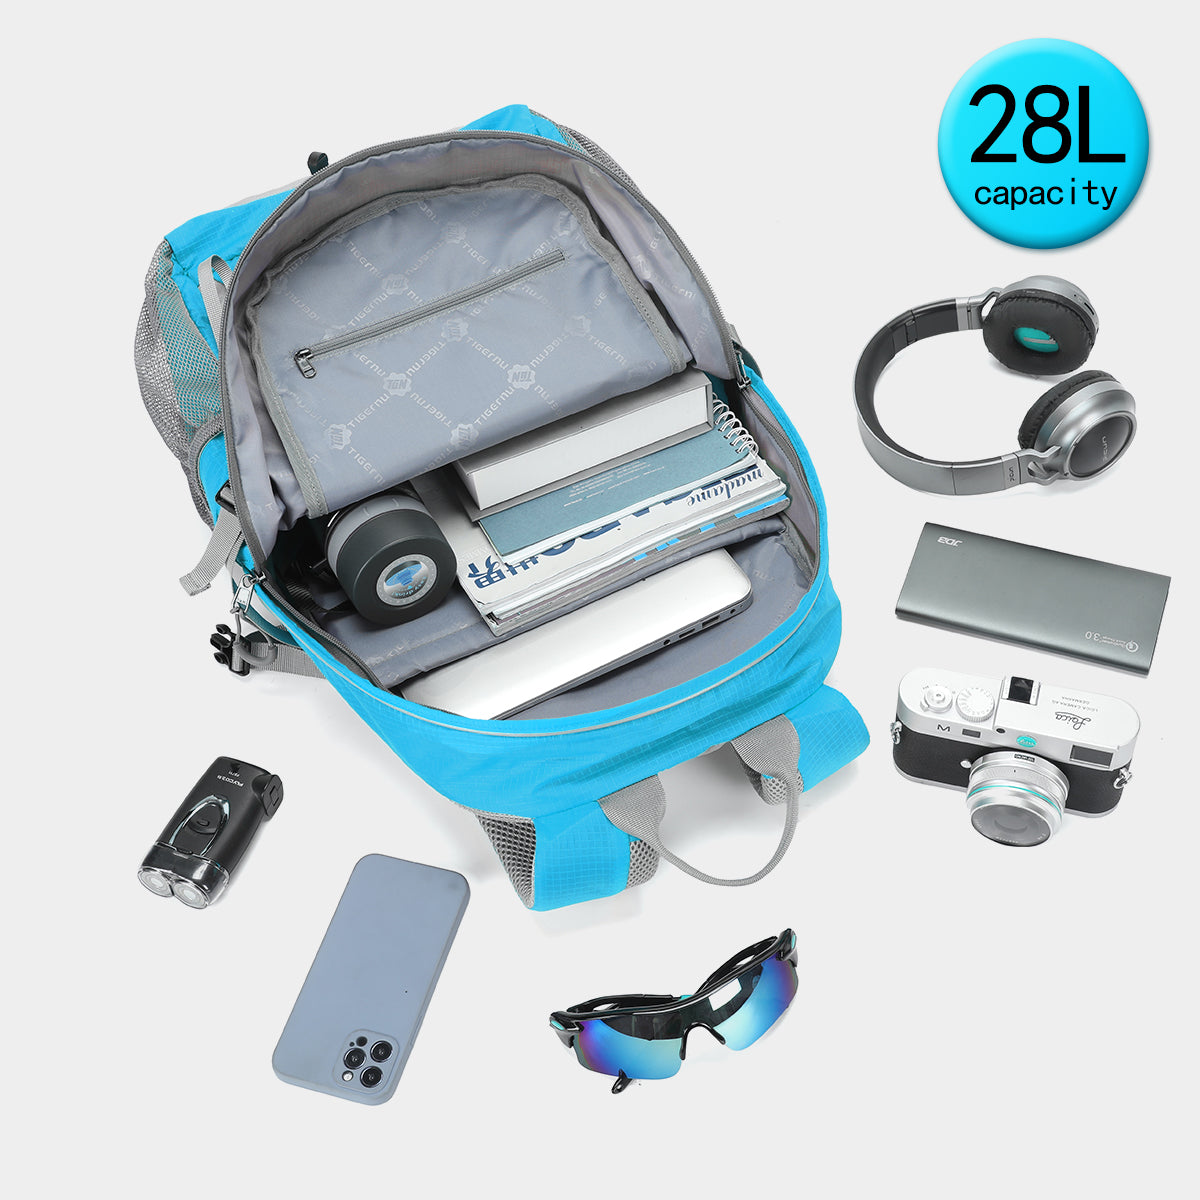 Tigernu T-B9500 Outdoor Commute Travel Backpack Bag